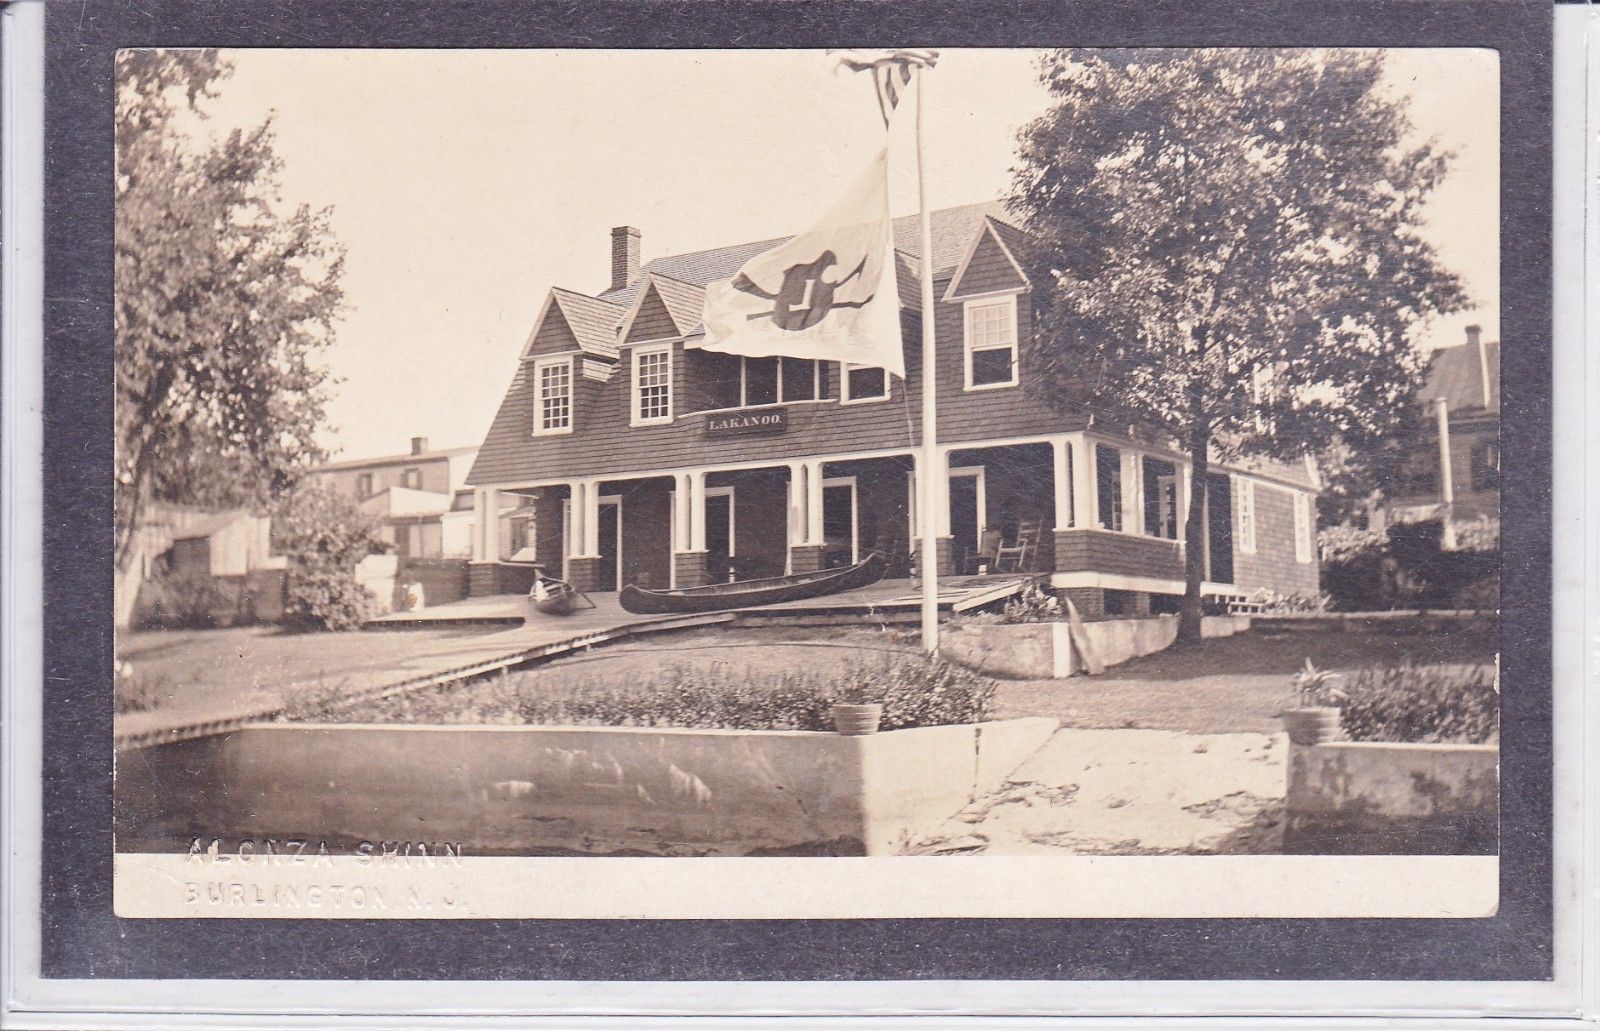 Burlington - Lakanoo Canoe Club on the Delaware River waterfront 0 1910